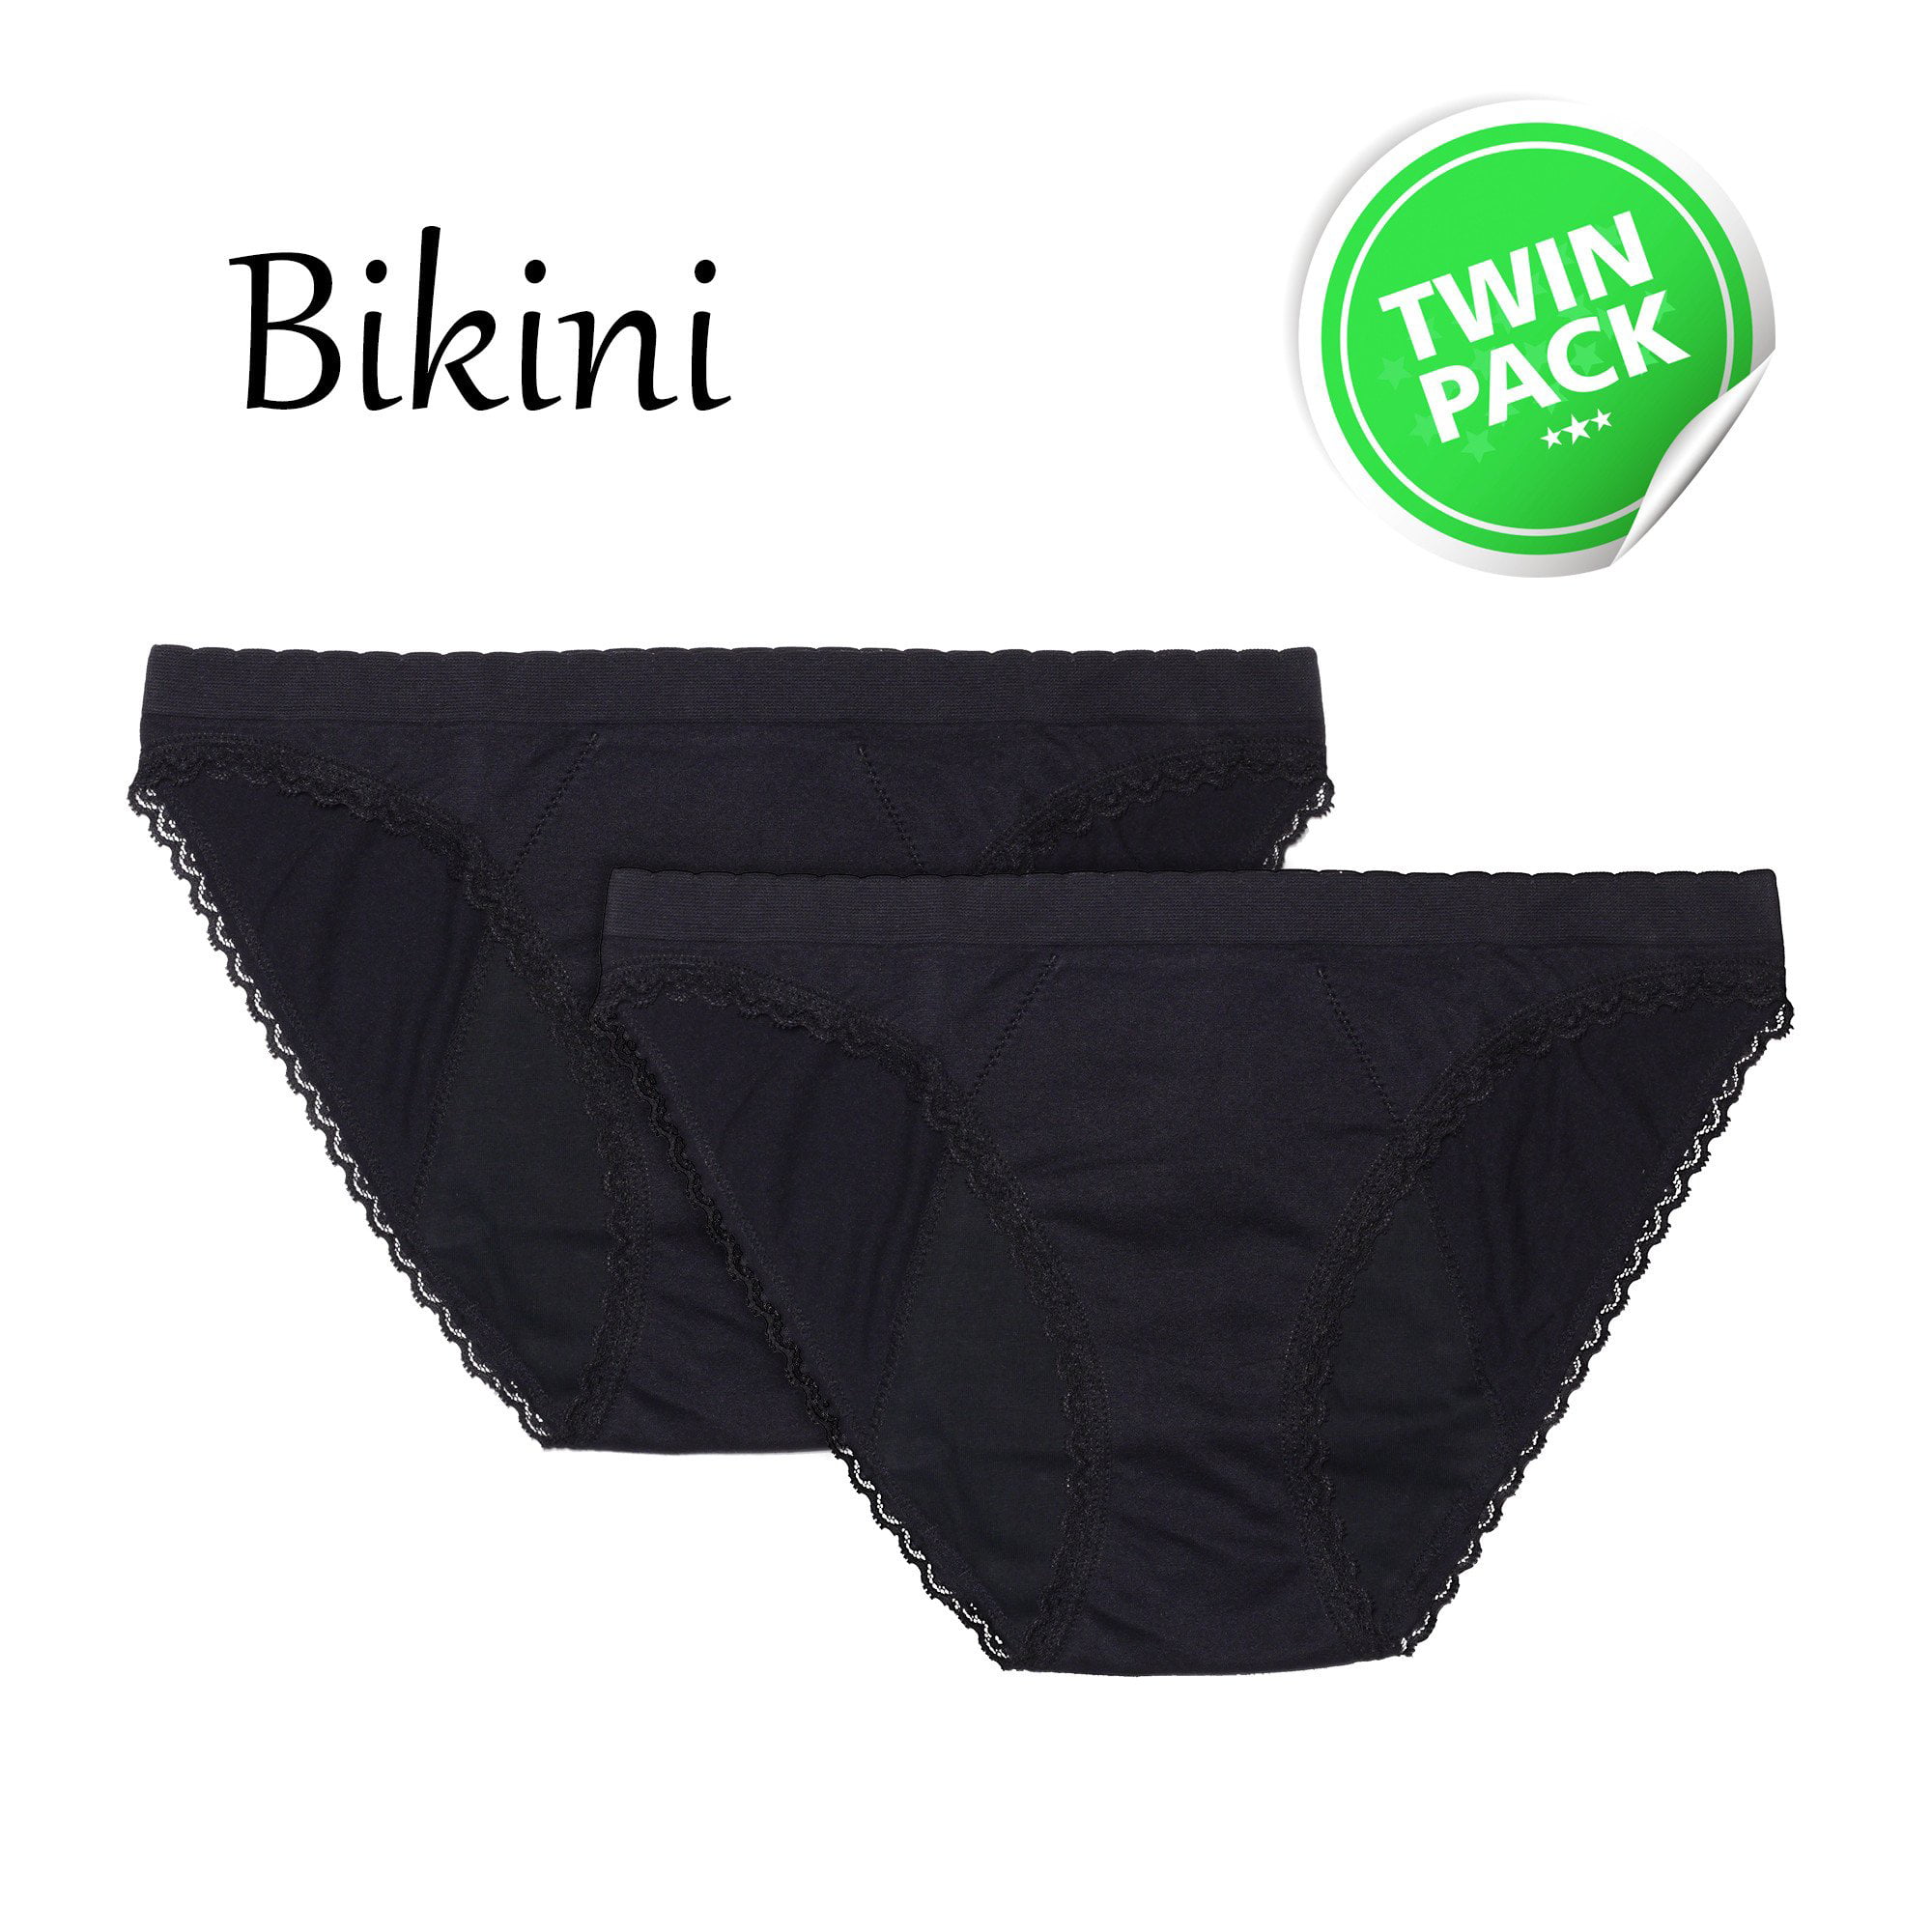 EvaWear Reusable Period Panty - 2 Pack Black Bikini (L) 